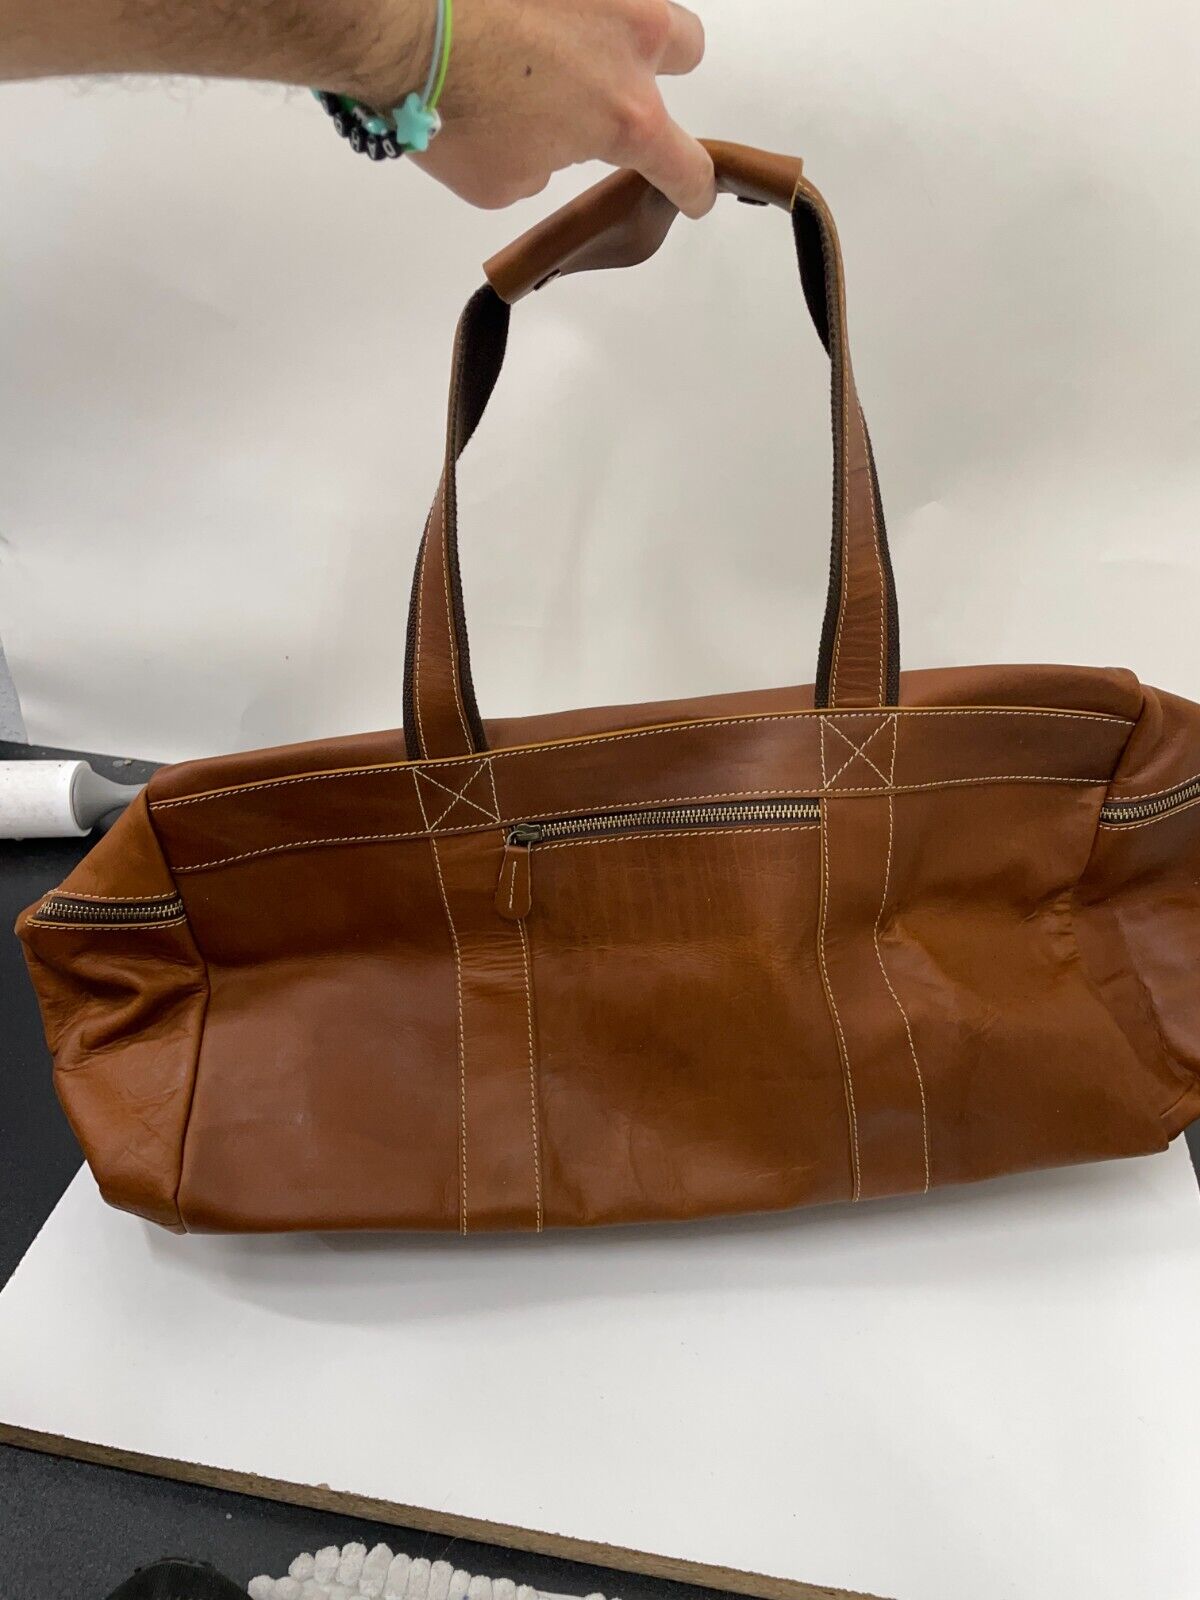 Viosi Genuine Leather Travel Duffel Bag Oversized Weekend Luggage Unisex Brown